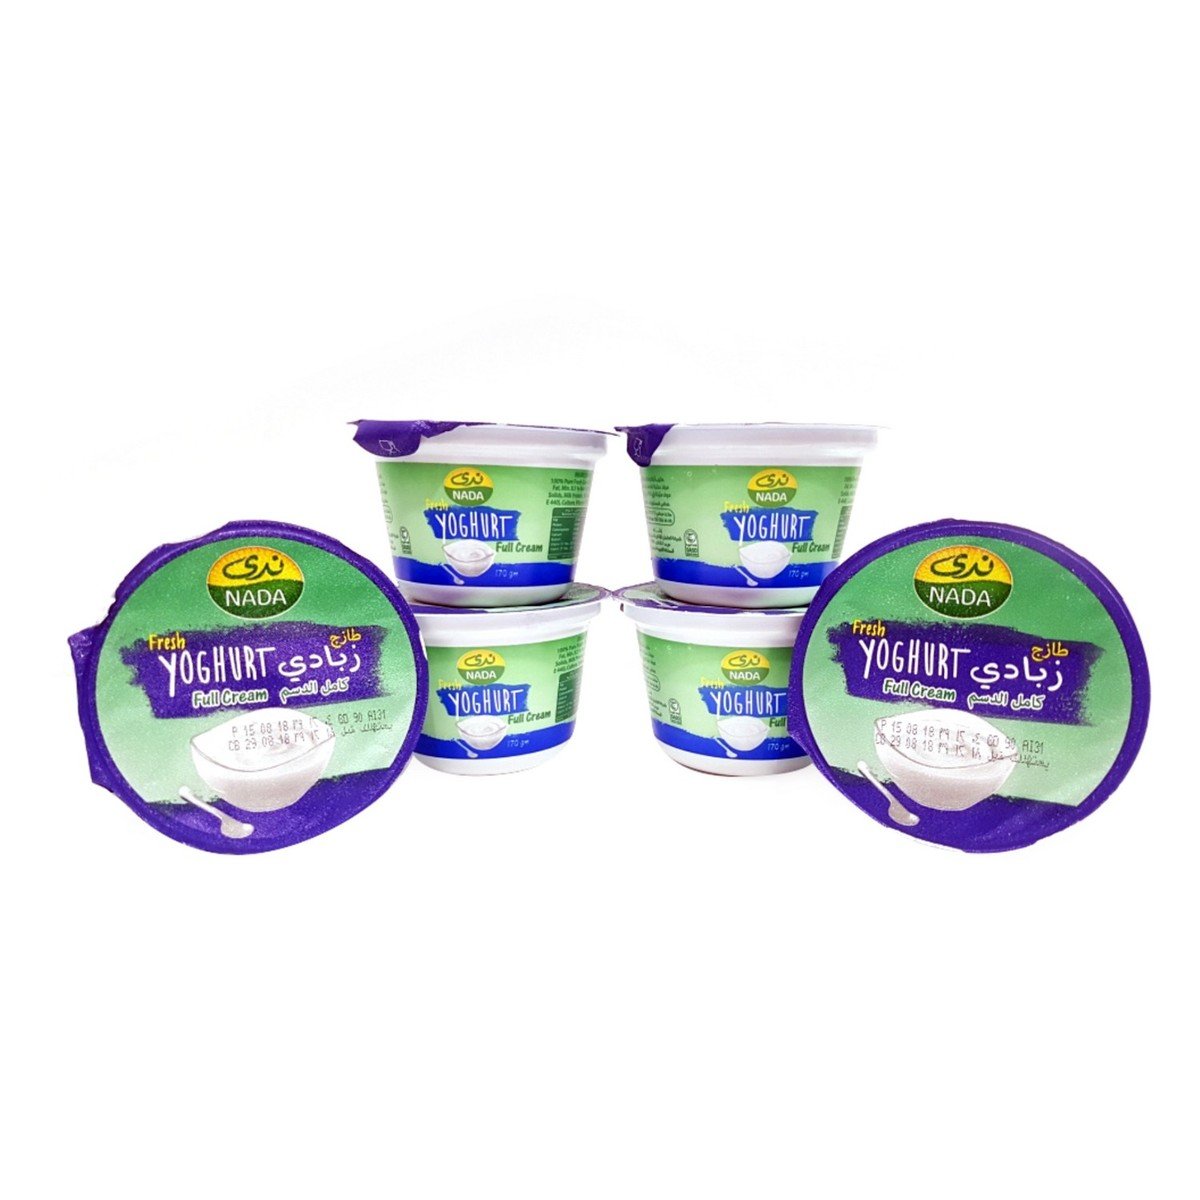 Nada Fresh Yoghurt Full Cream 6 x 170g